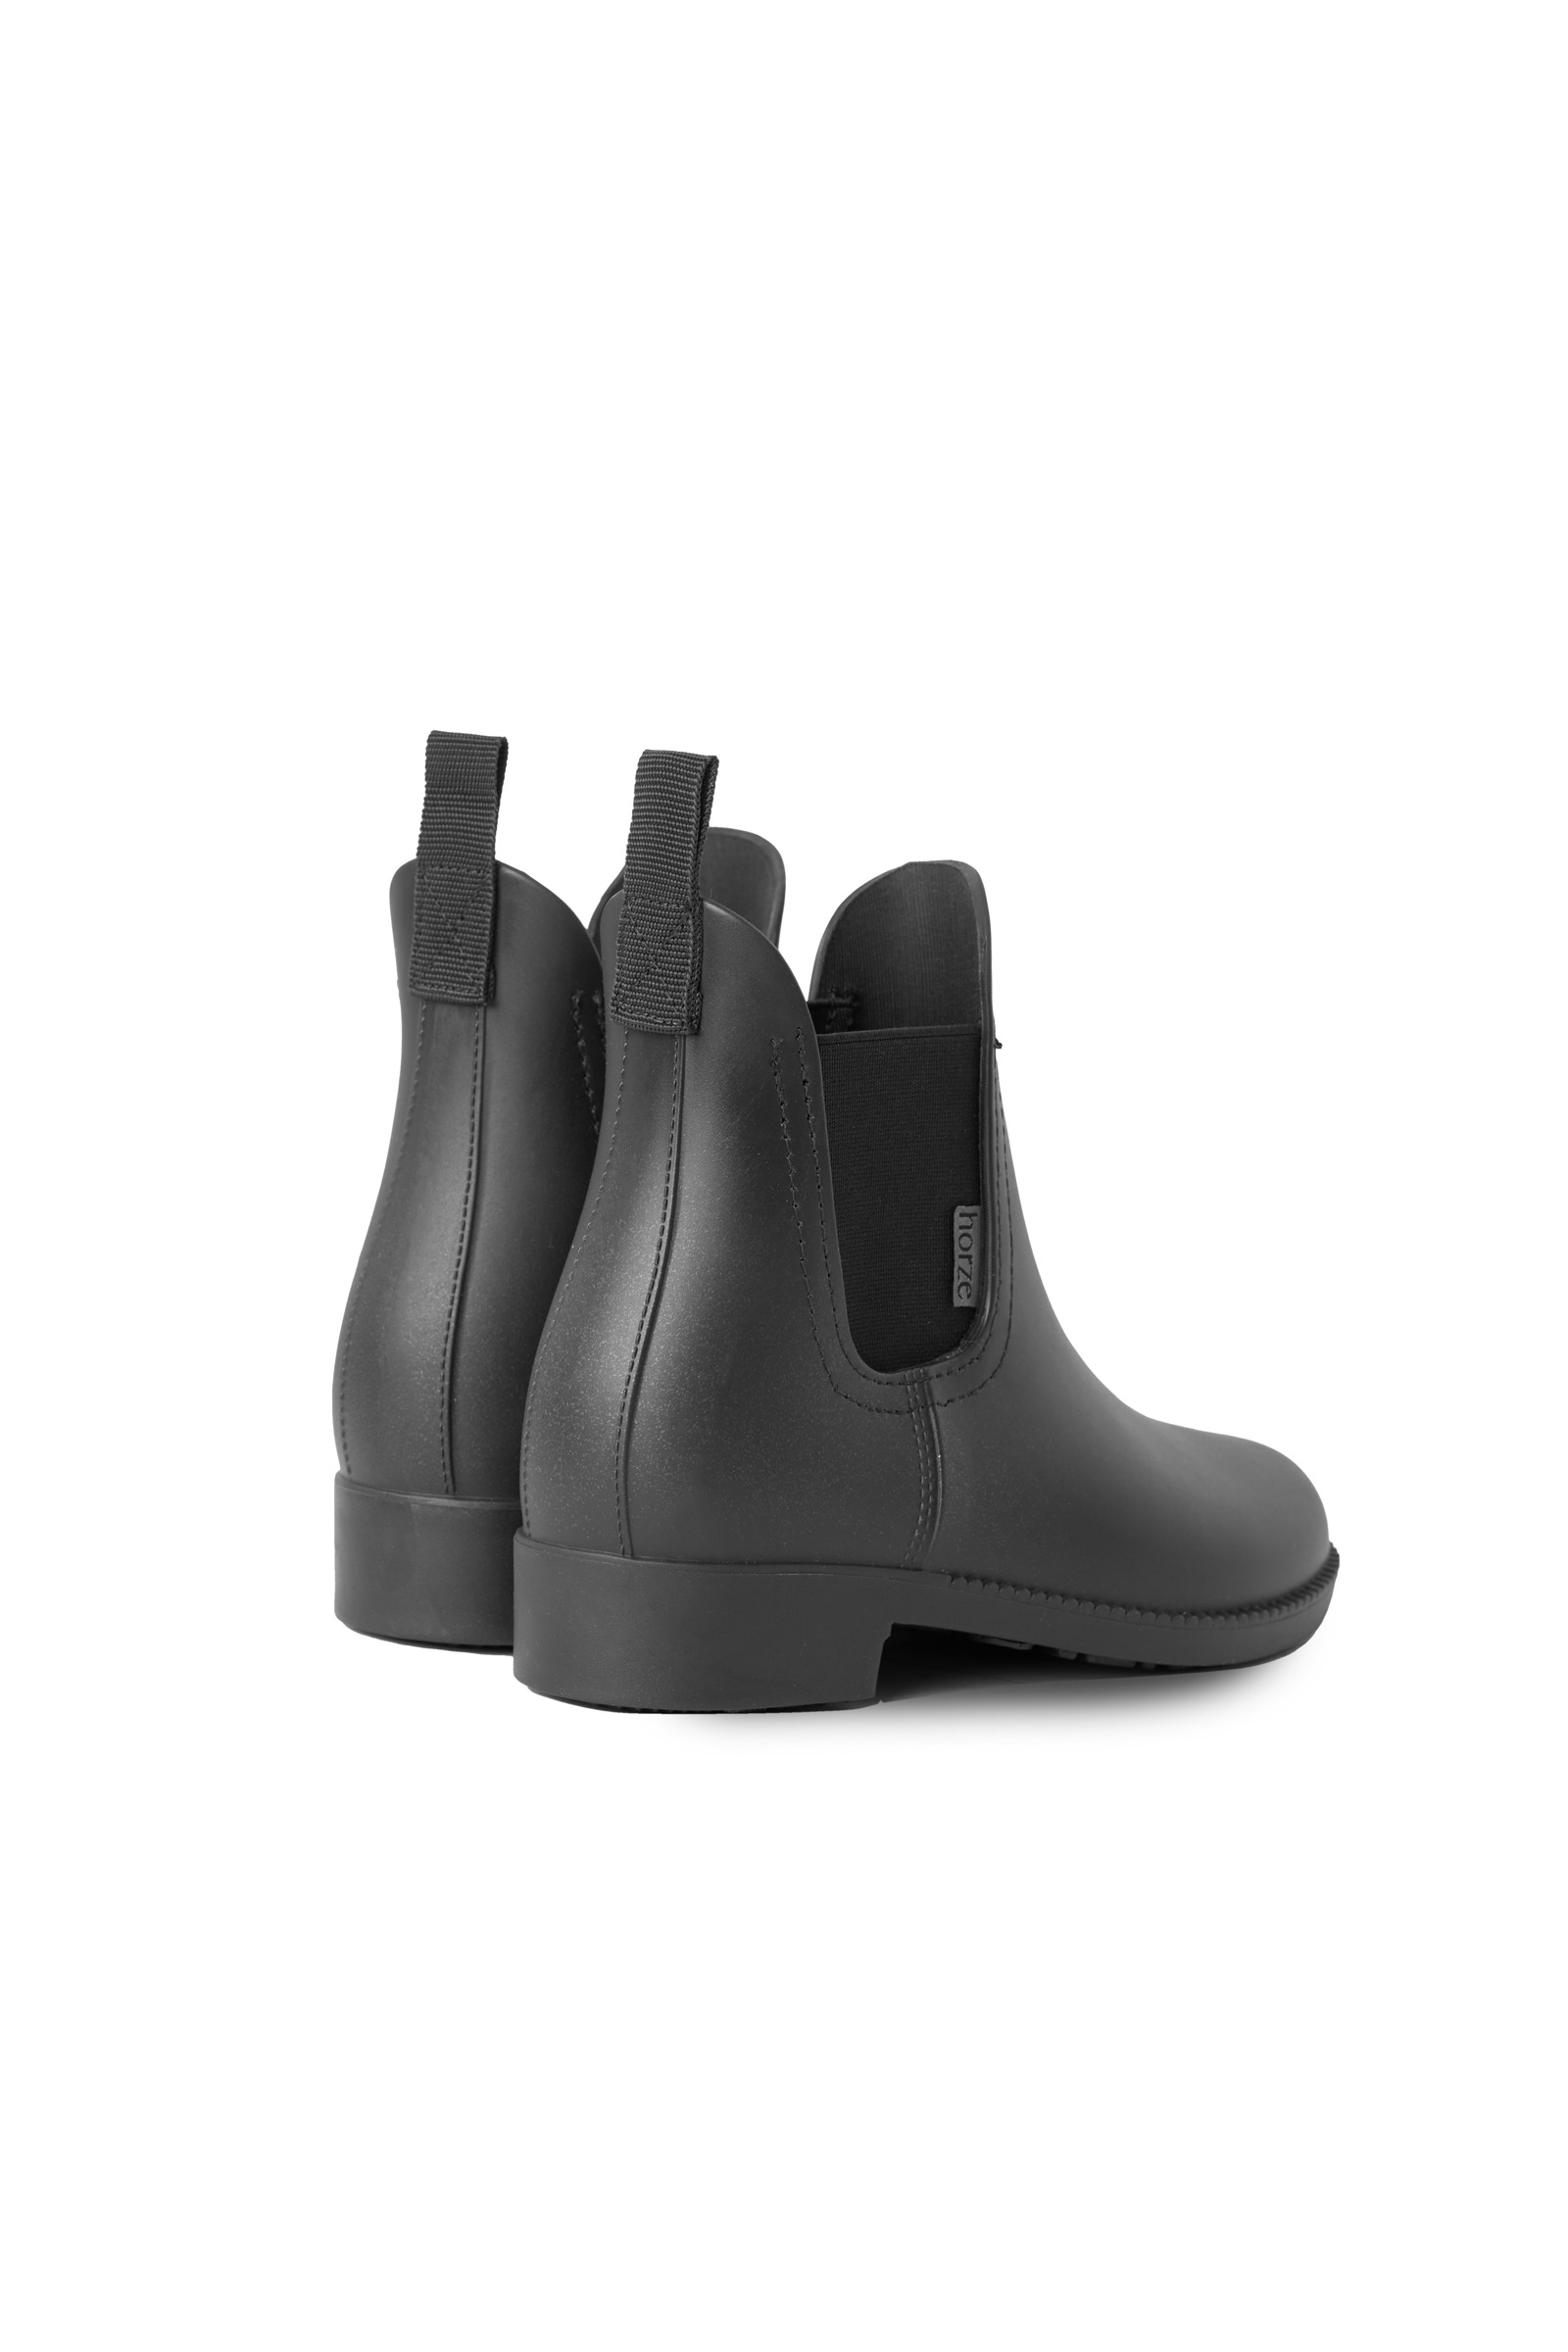 Buy Horze Bonn Rubber Boots | horze.com